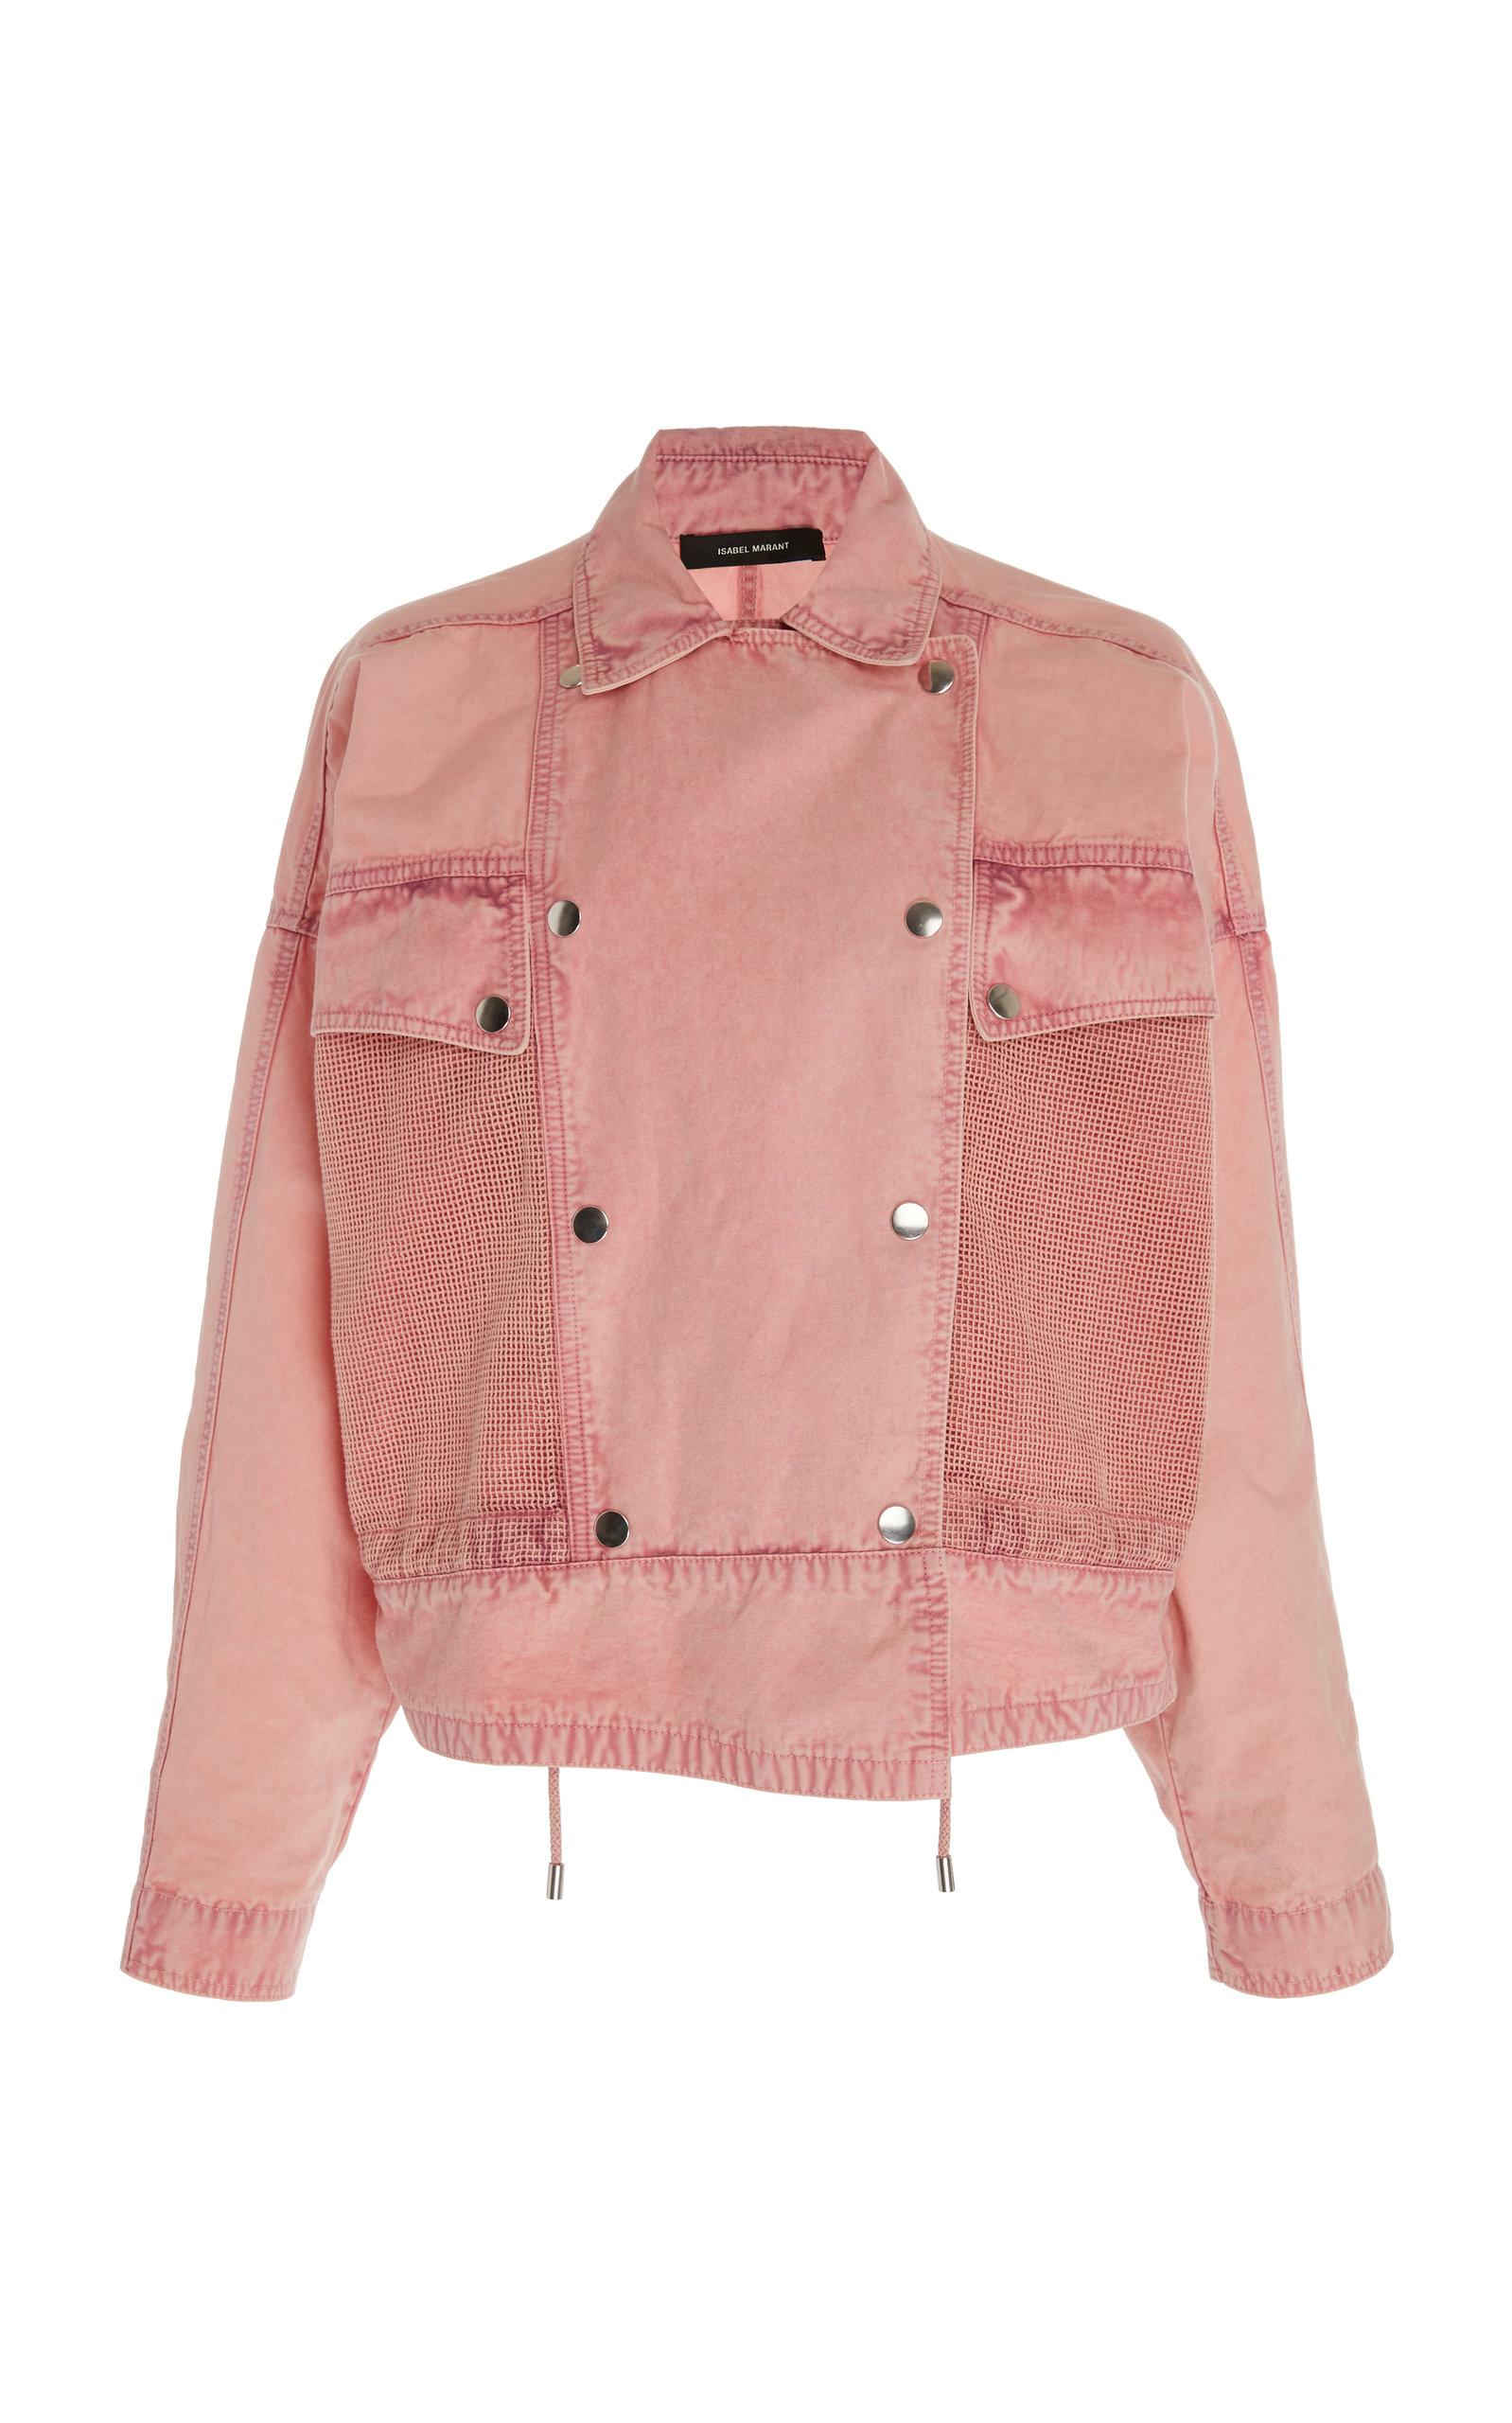 Isabel Marant Thalia Mesh-paneled Denim Jacket in Pastel Pink (Pink) - Lyst